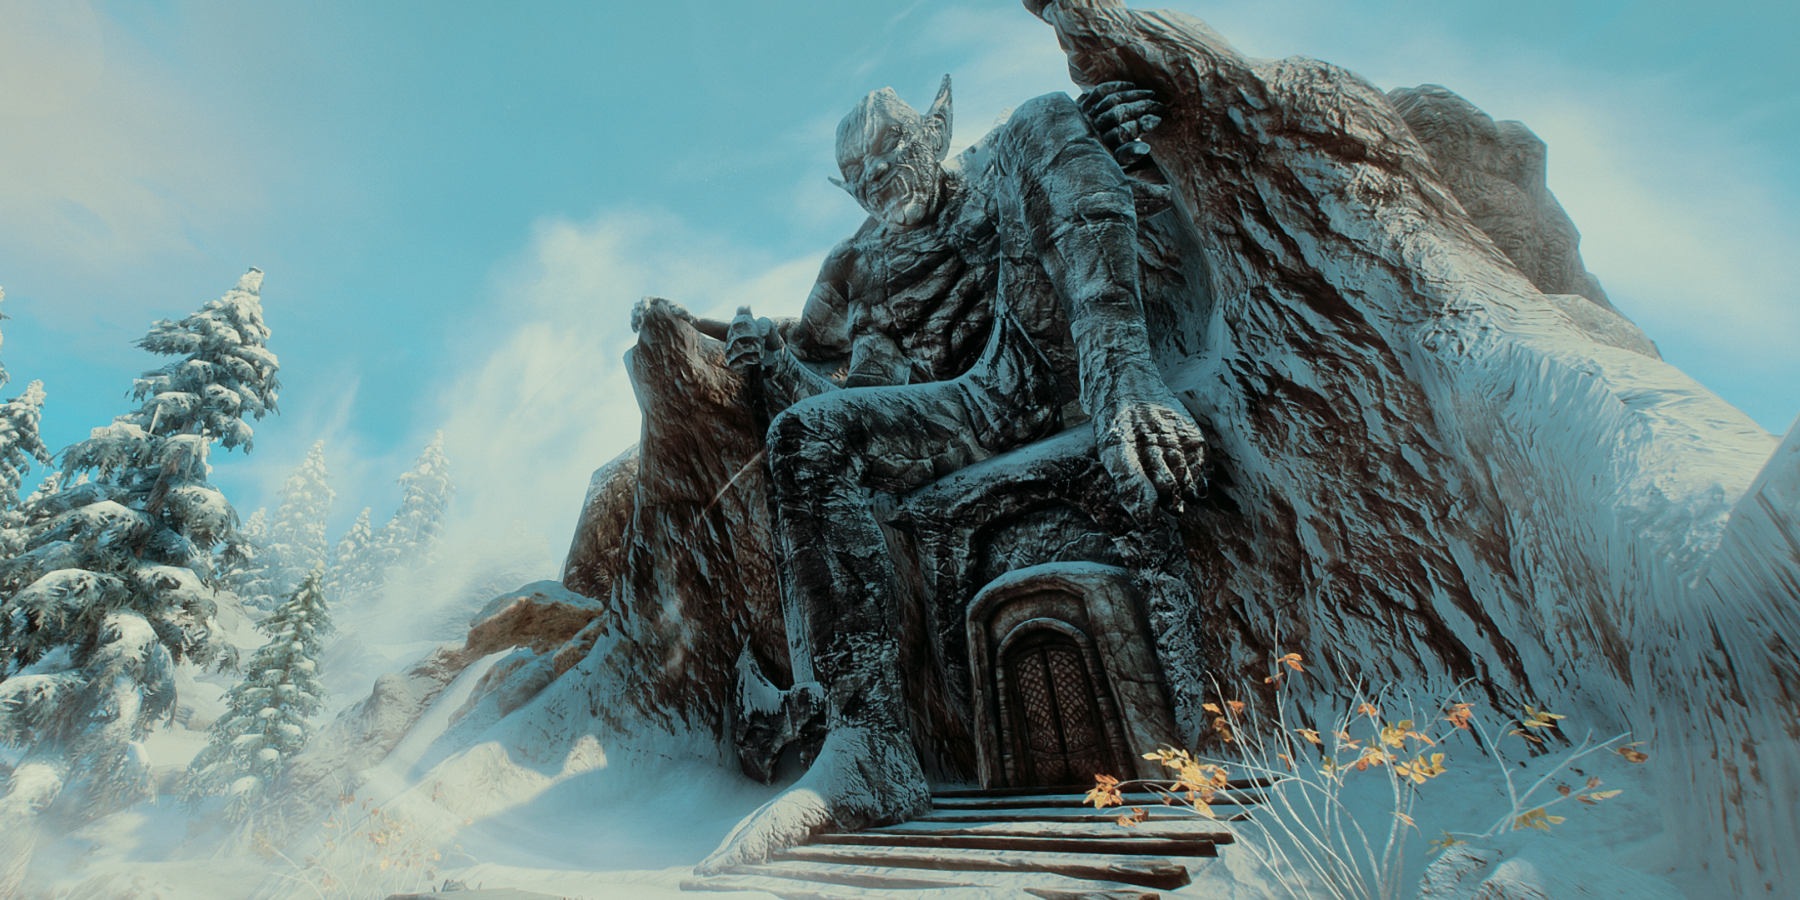 Screenshot from Skyrim showing the exterior for the Mehrune's Dagon shrine.